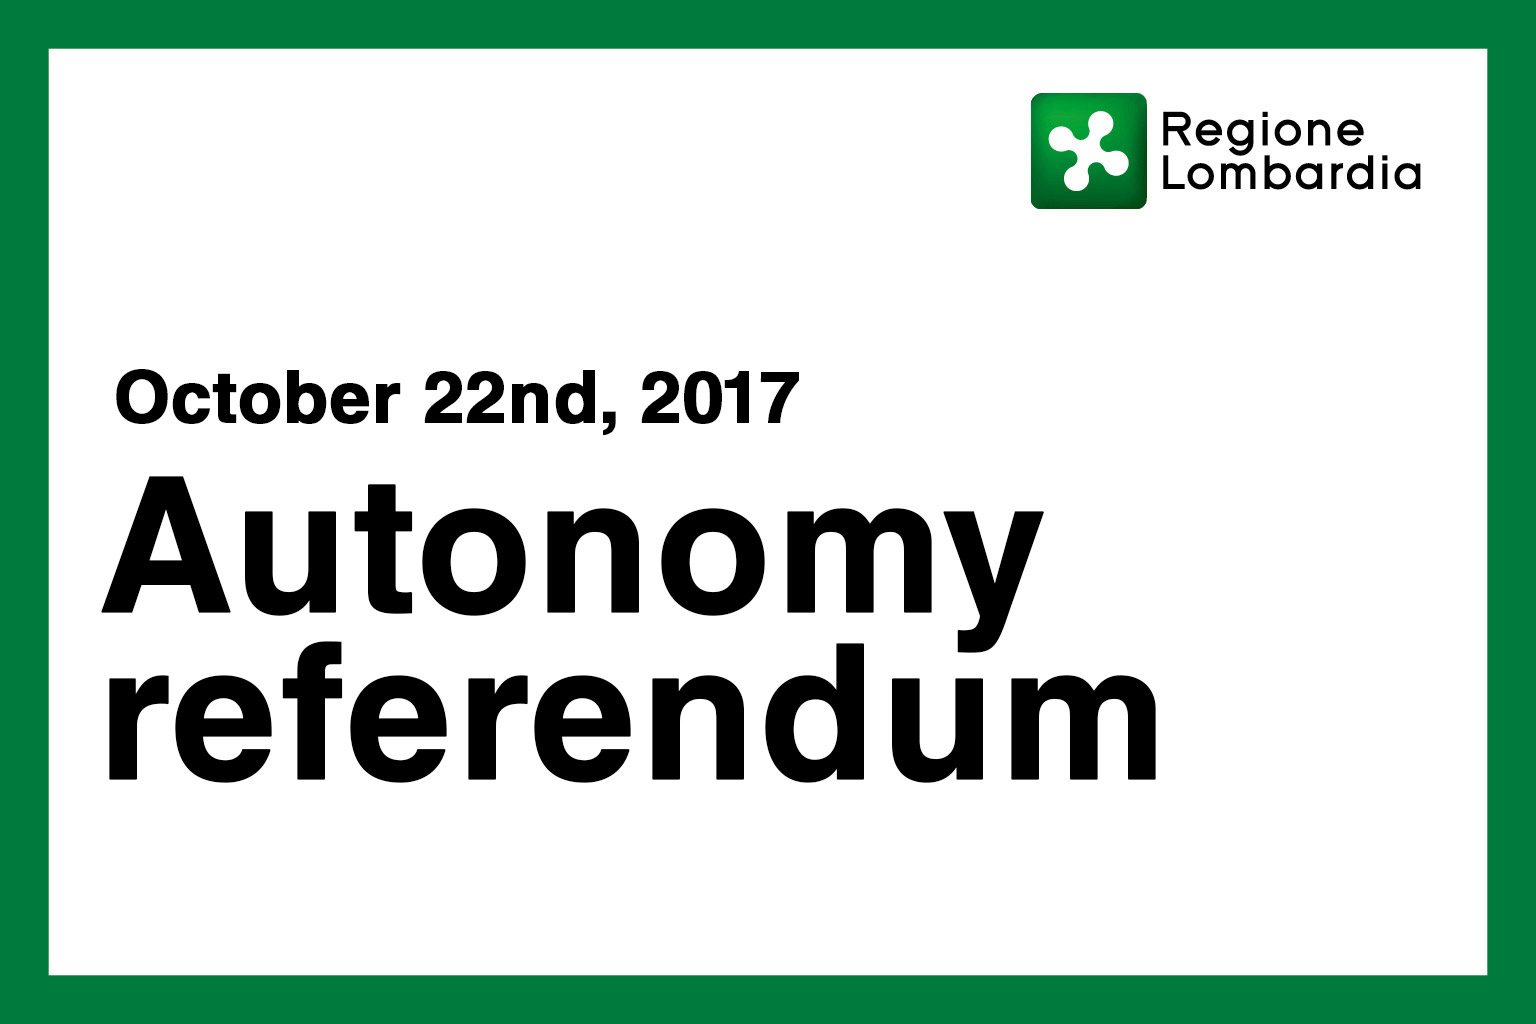 Referendum Autonomy